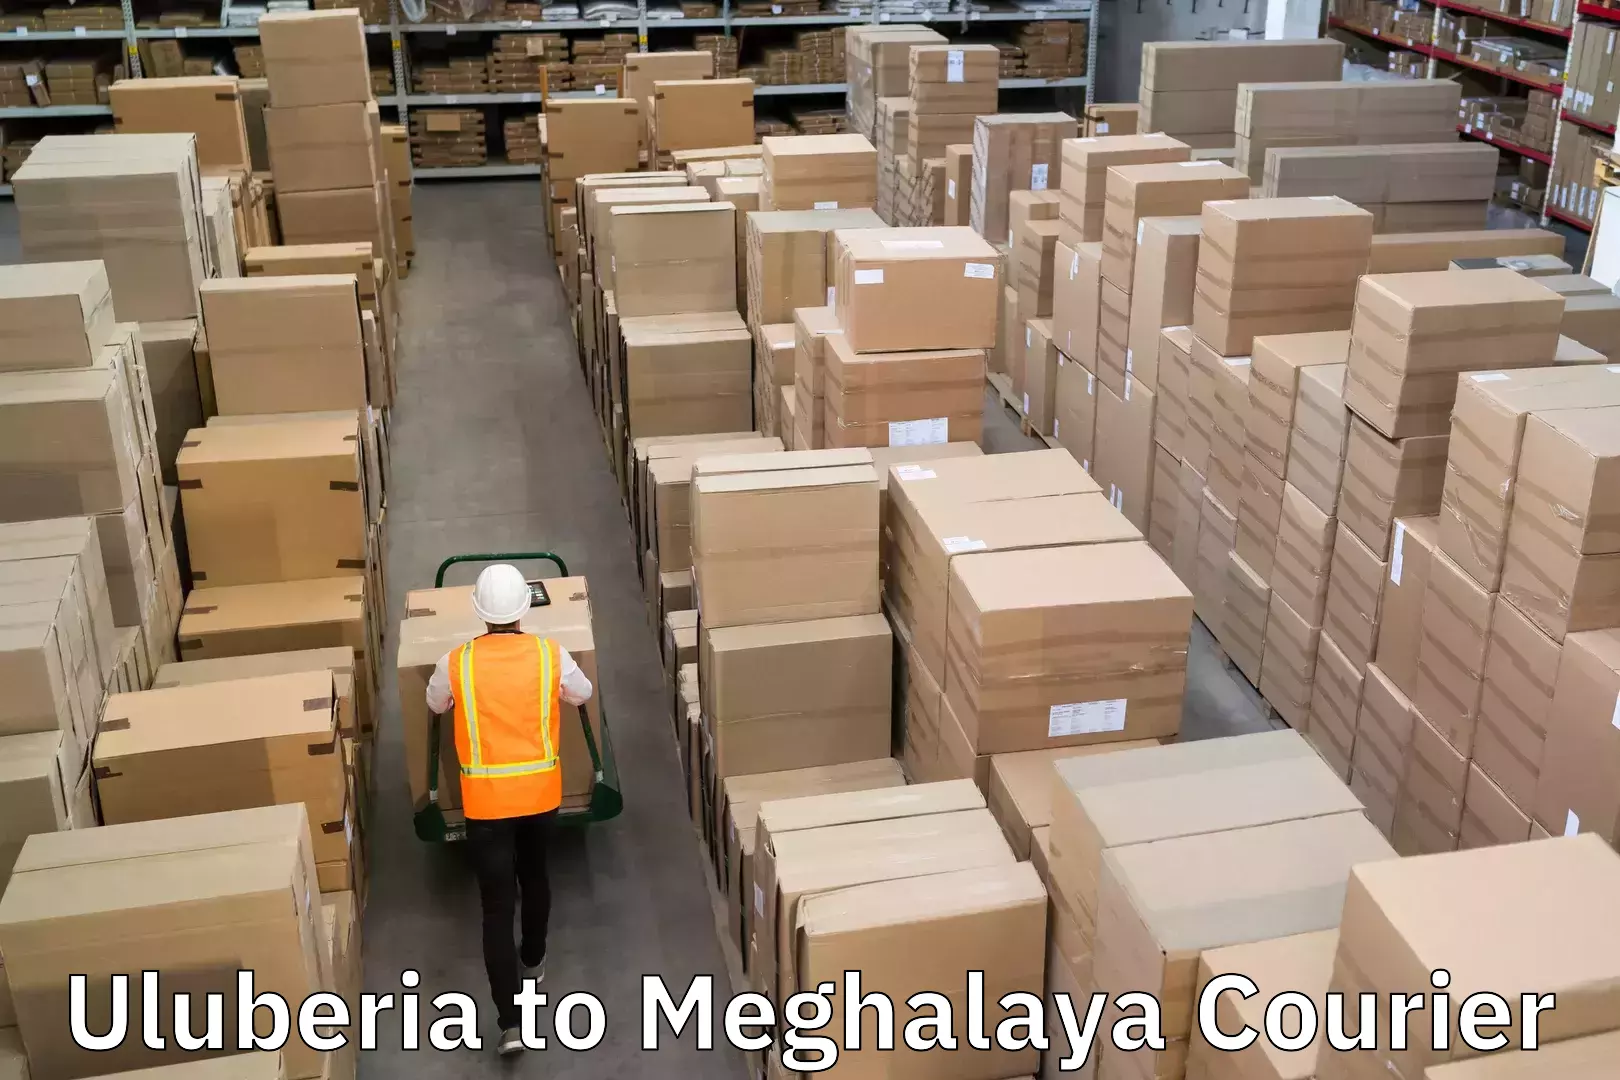 Courier service comparison Uluberia to Meghalaya